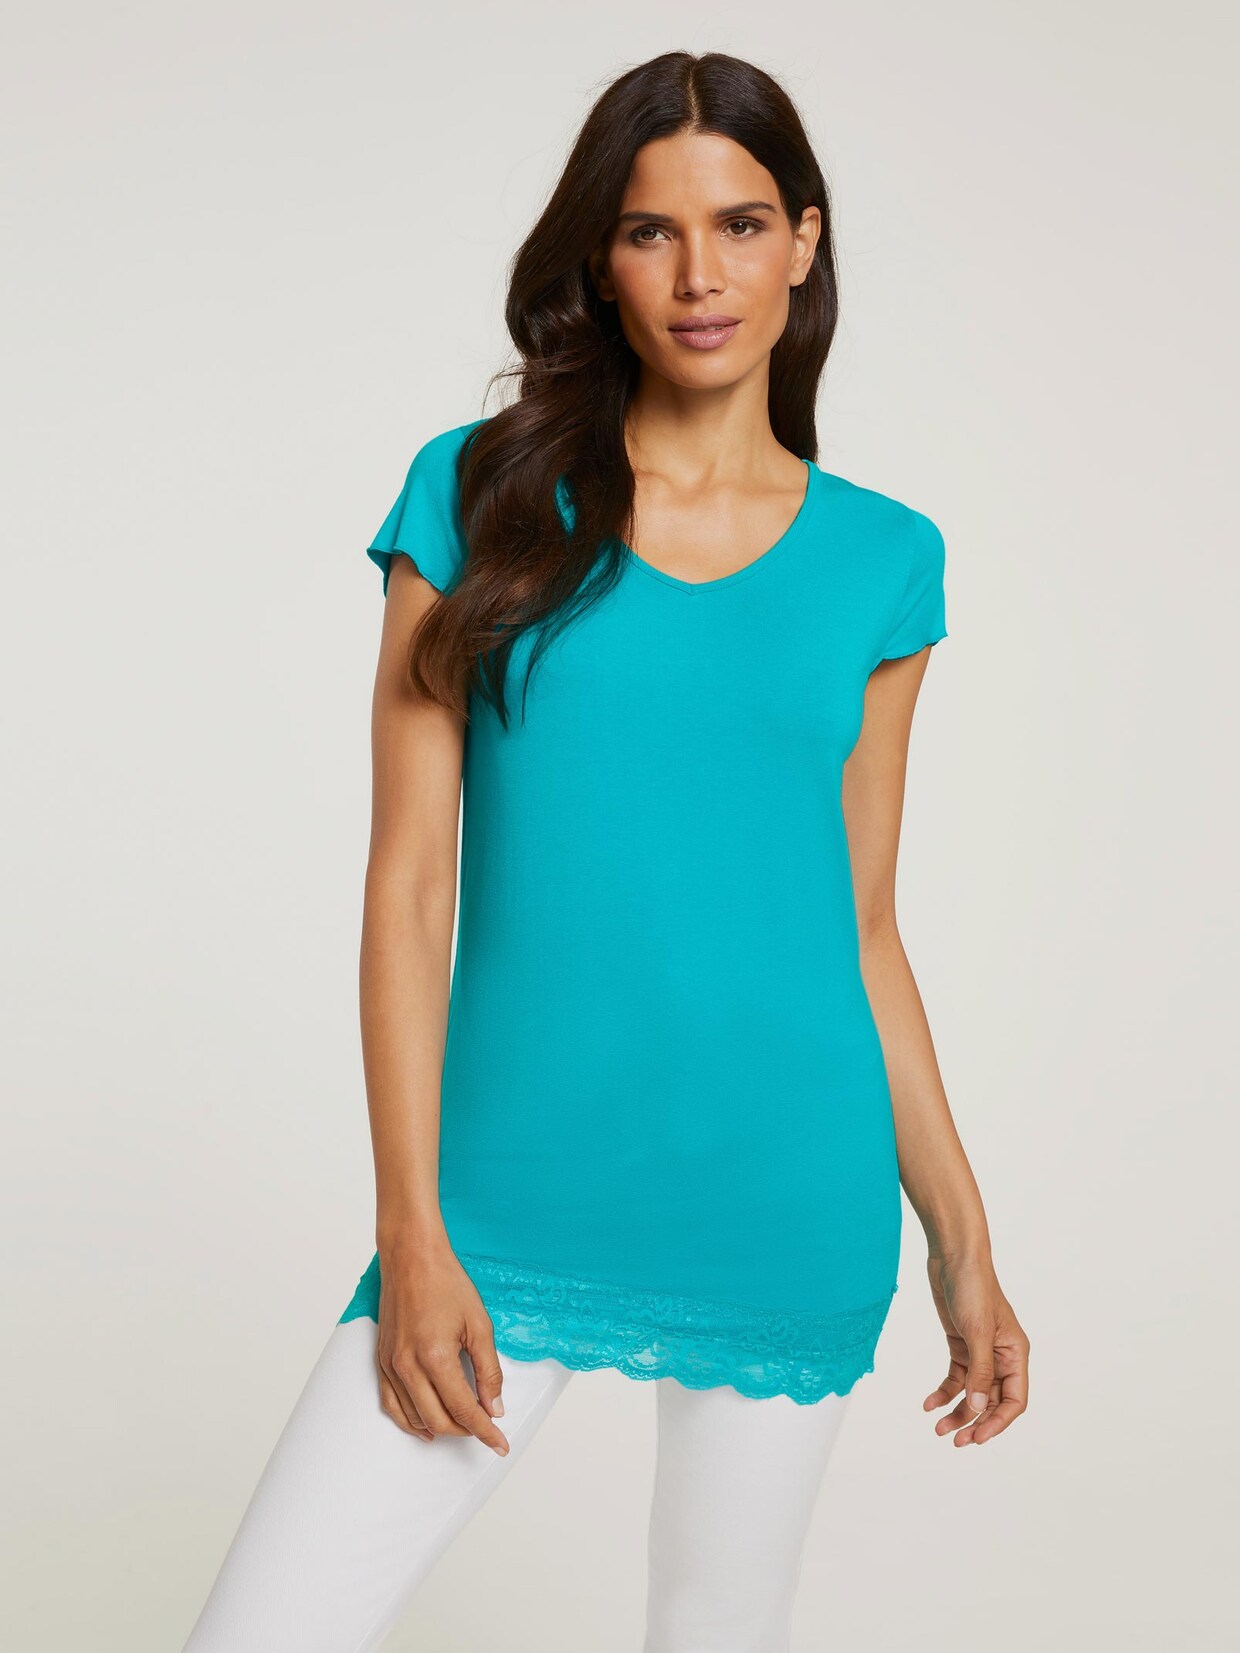 Linea Tesini shirt - turquoise